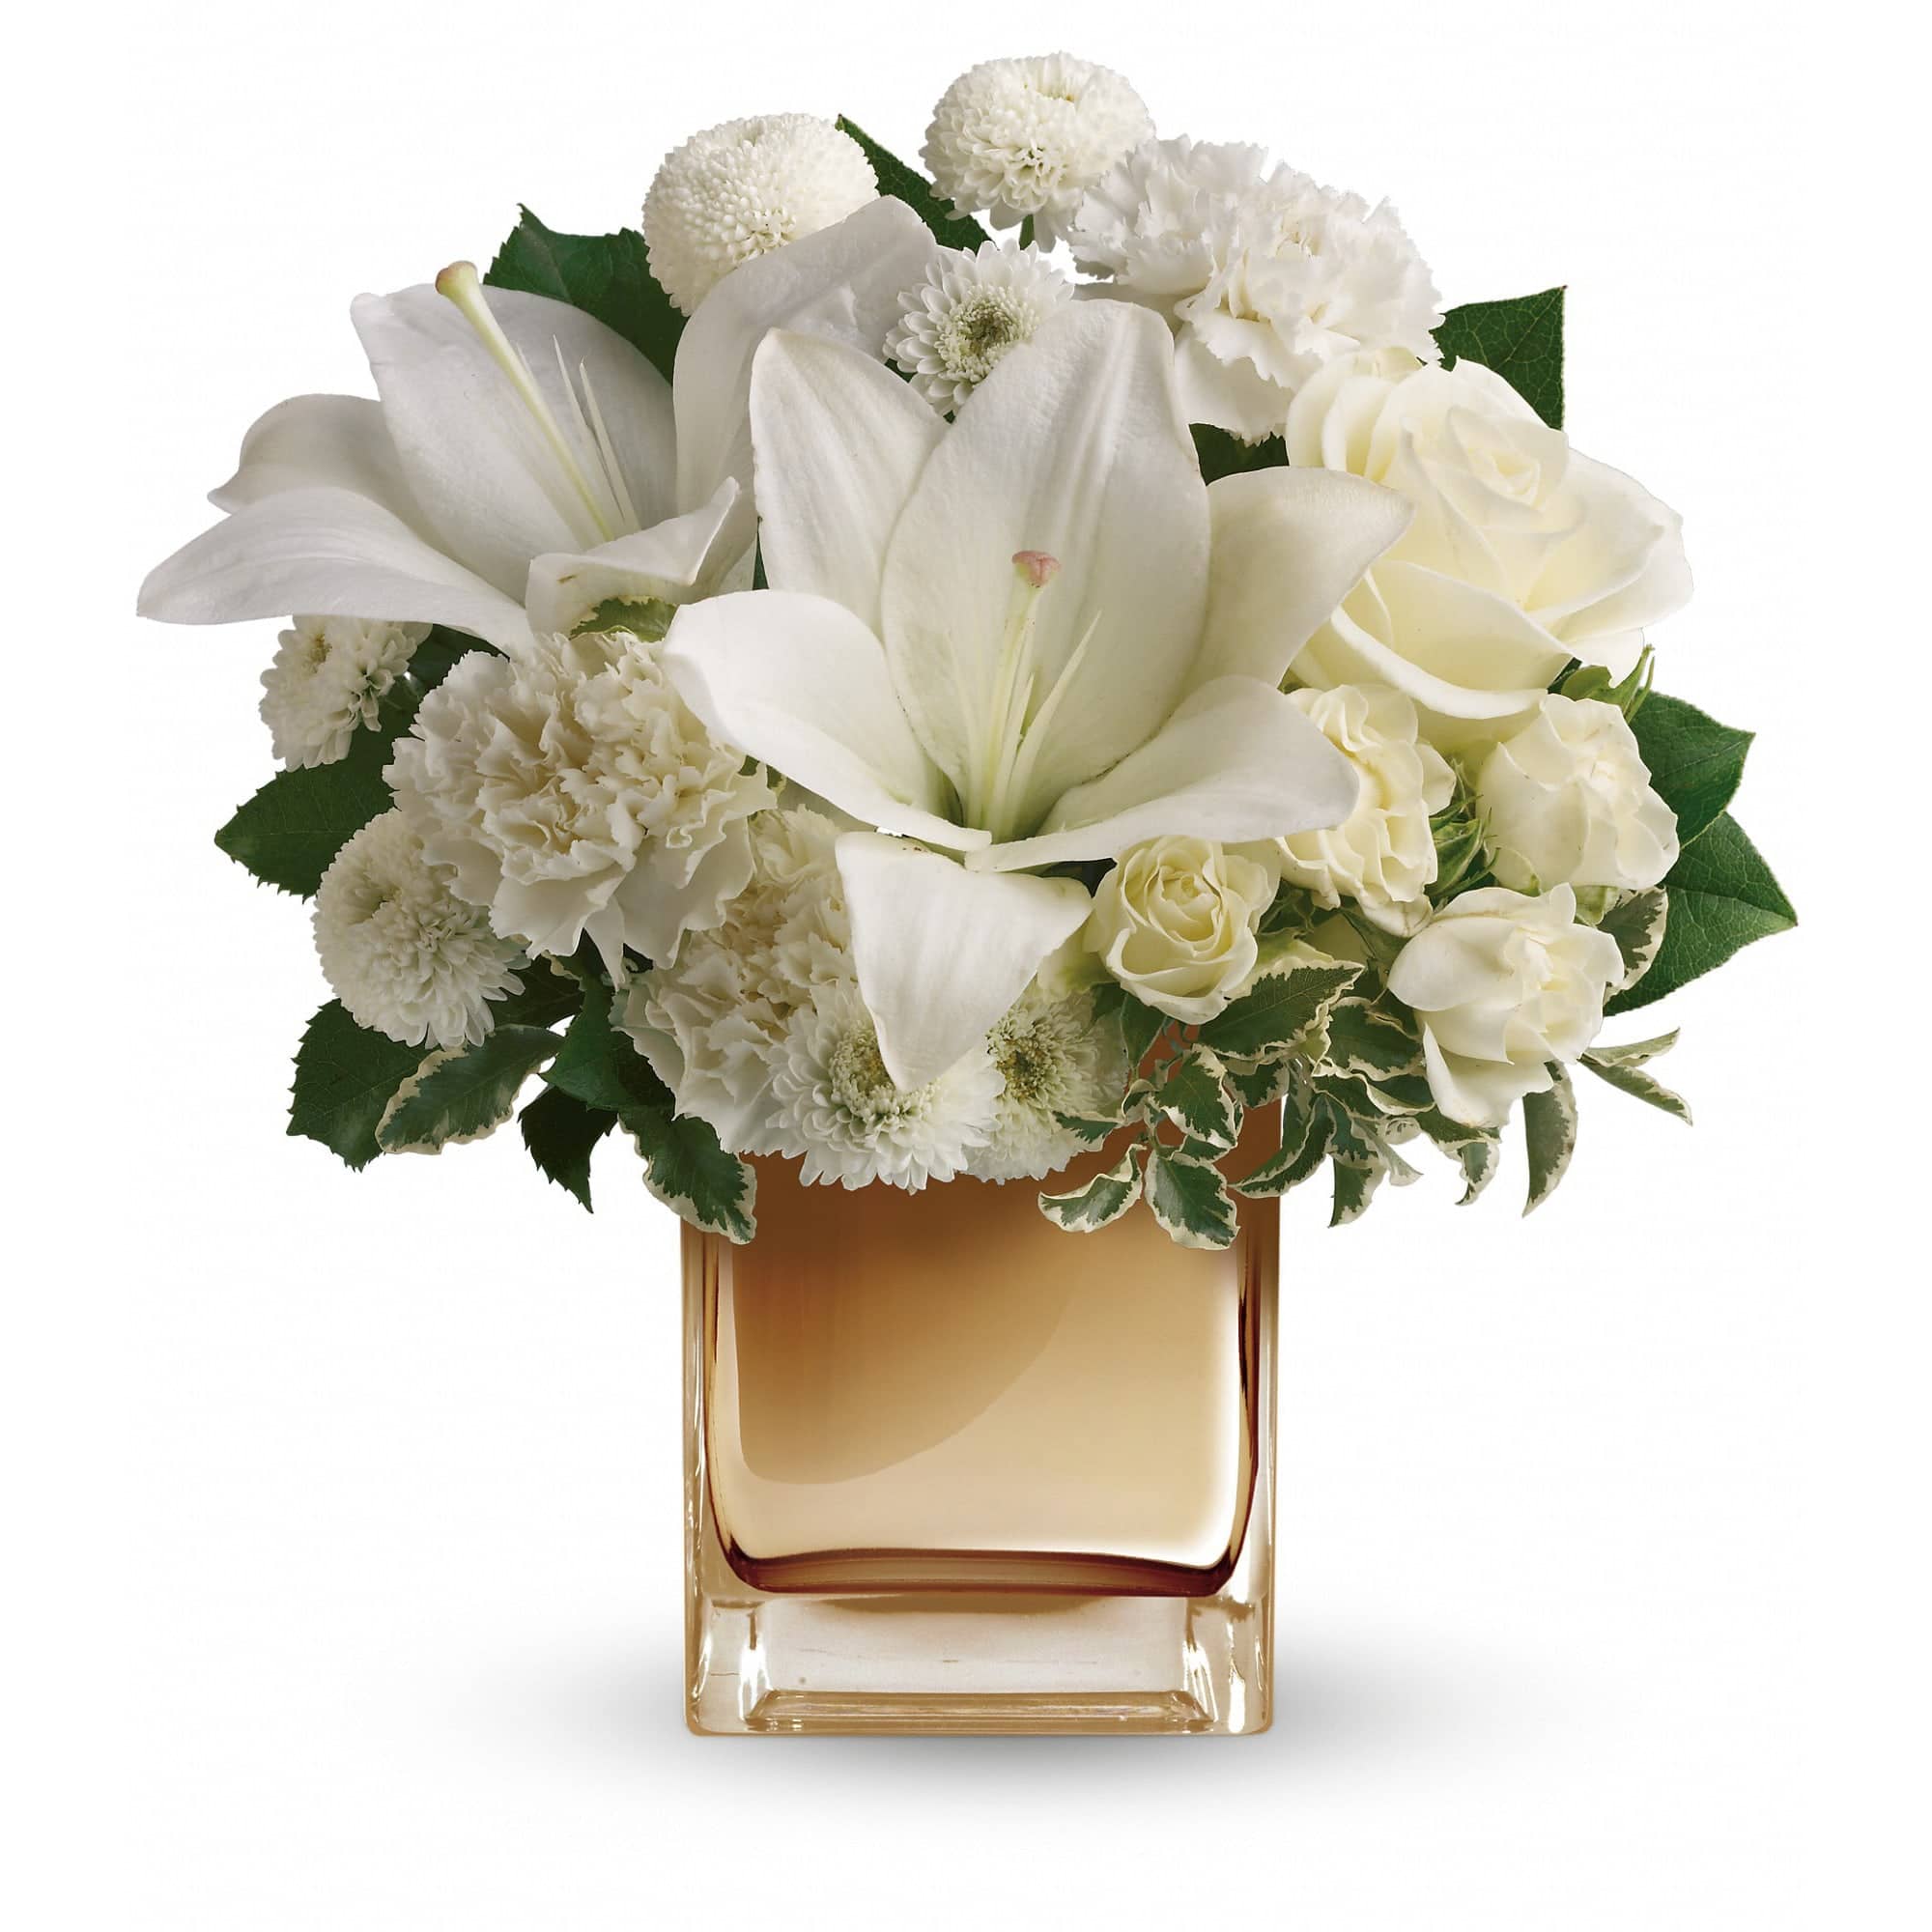 white lilies in bronze vase